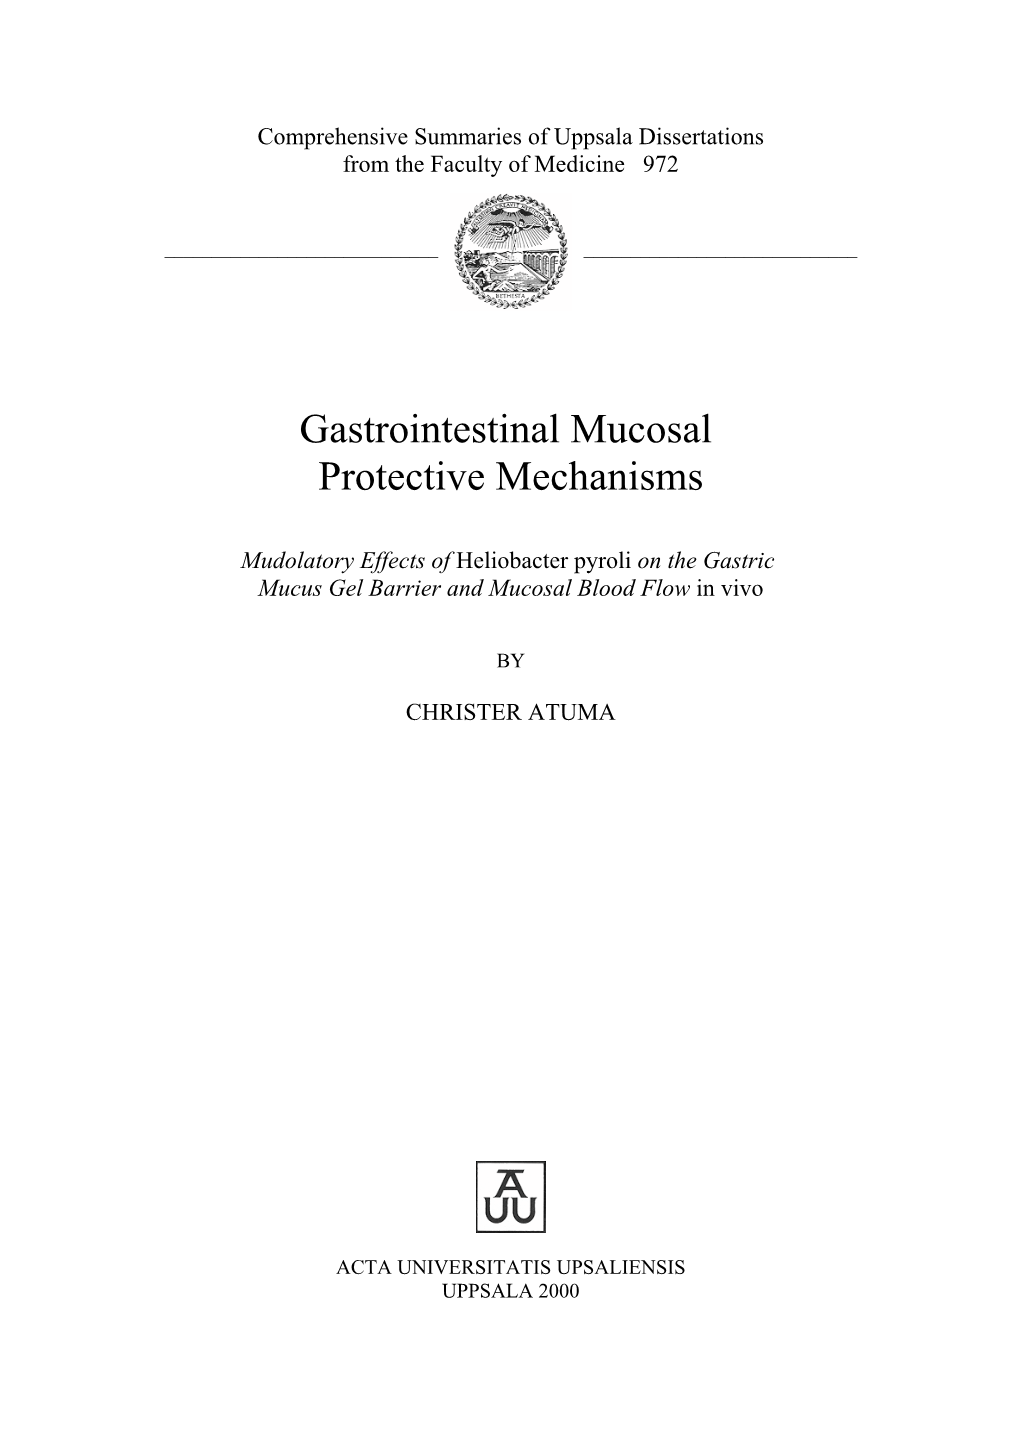 Gastrointestinal Mucosal Protective Mechanisms